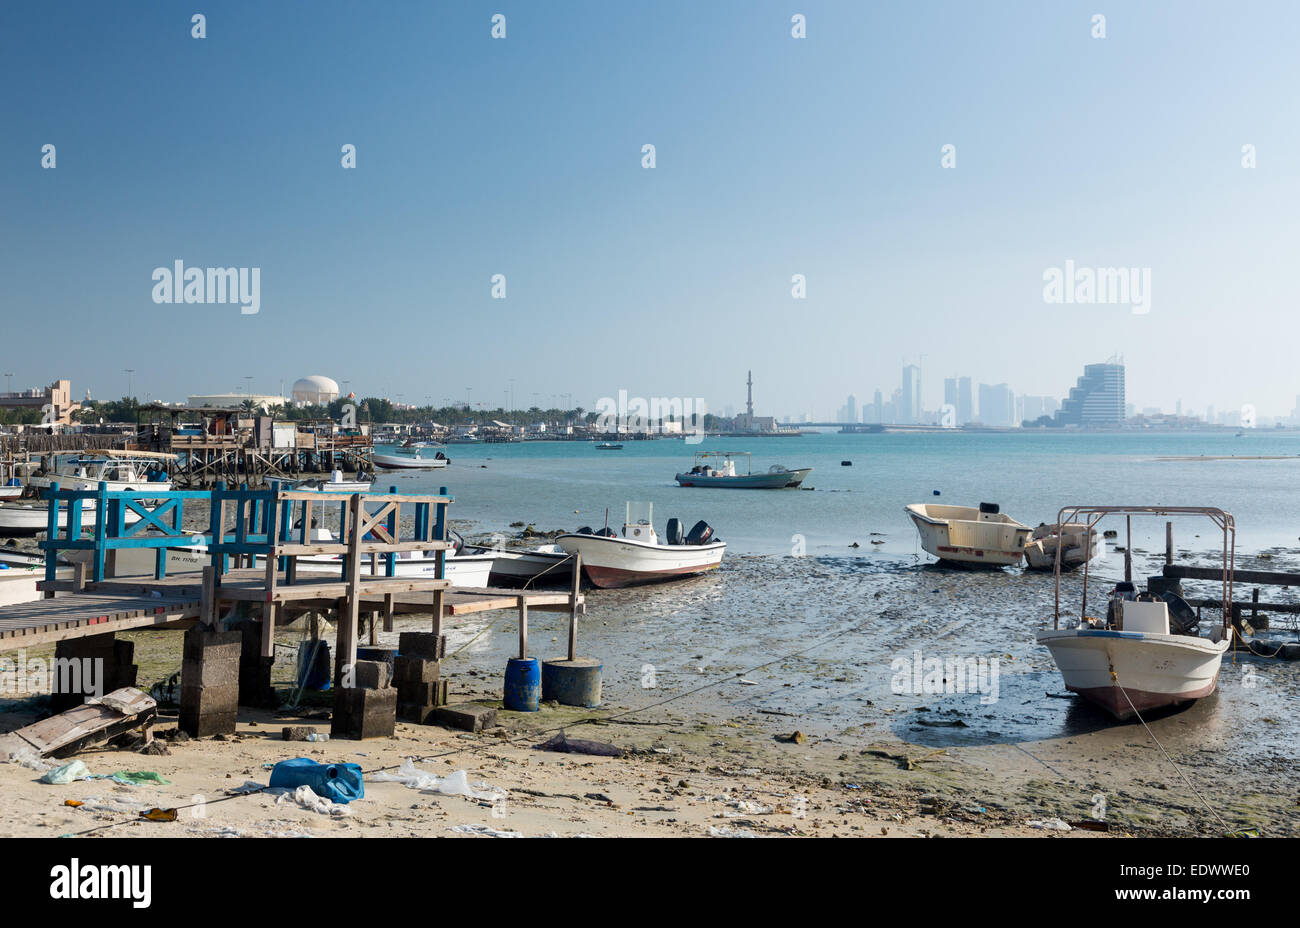 Ramshackle fishermans hut or shack on waterside overlooking Manama, Bahrain, Middle East Stock Photo